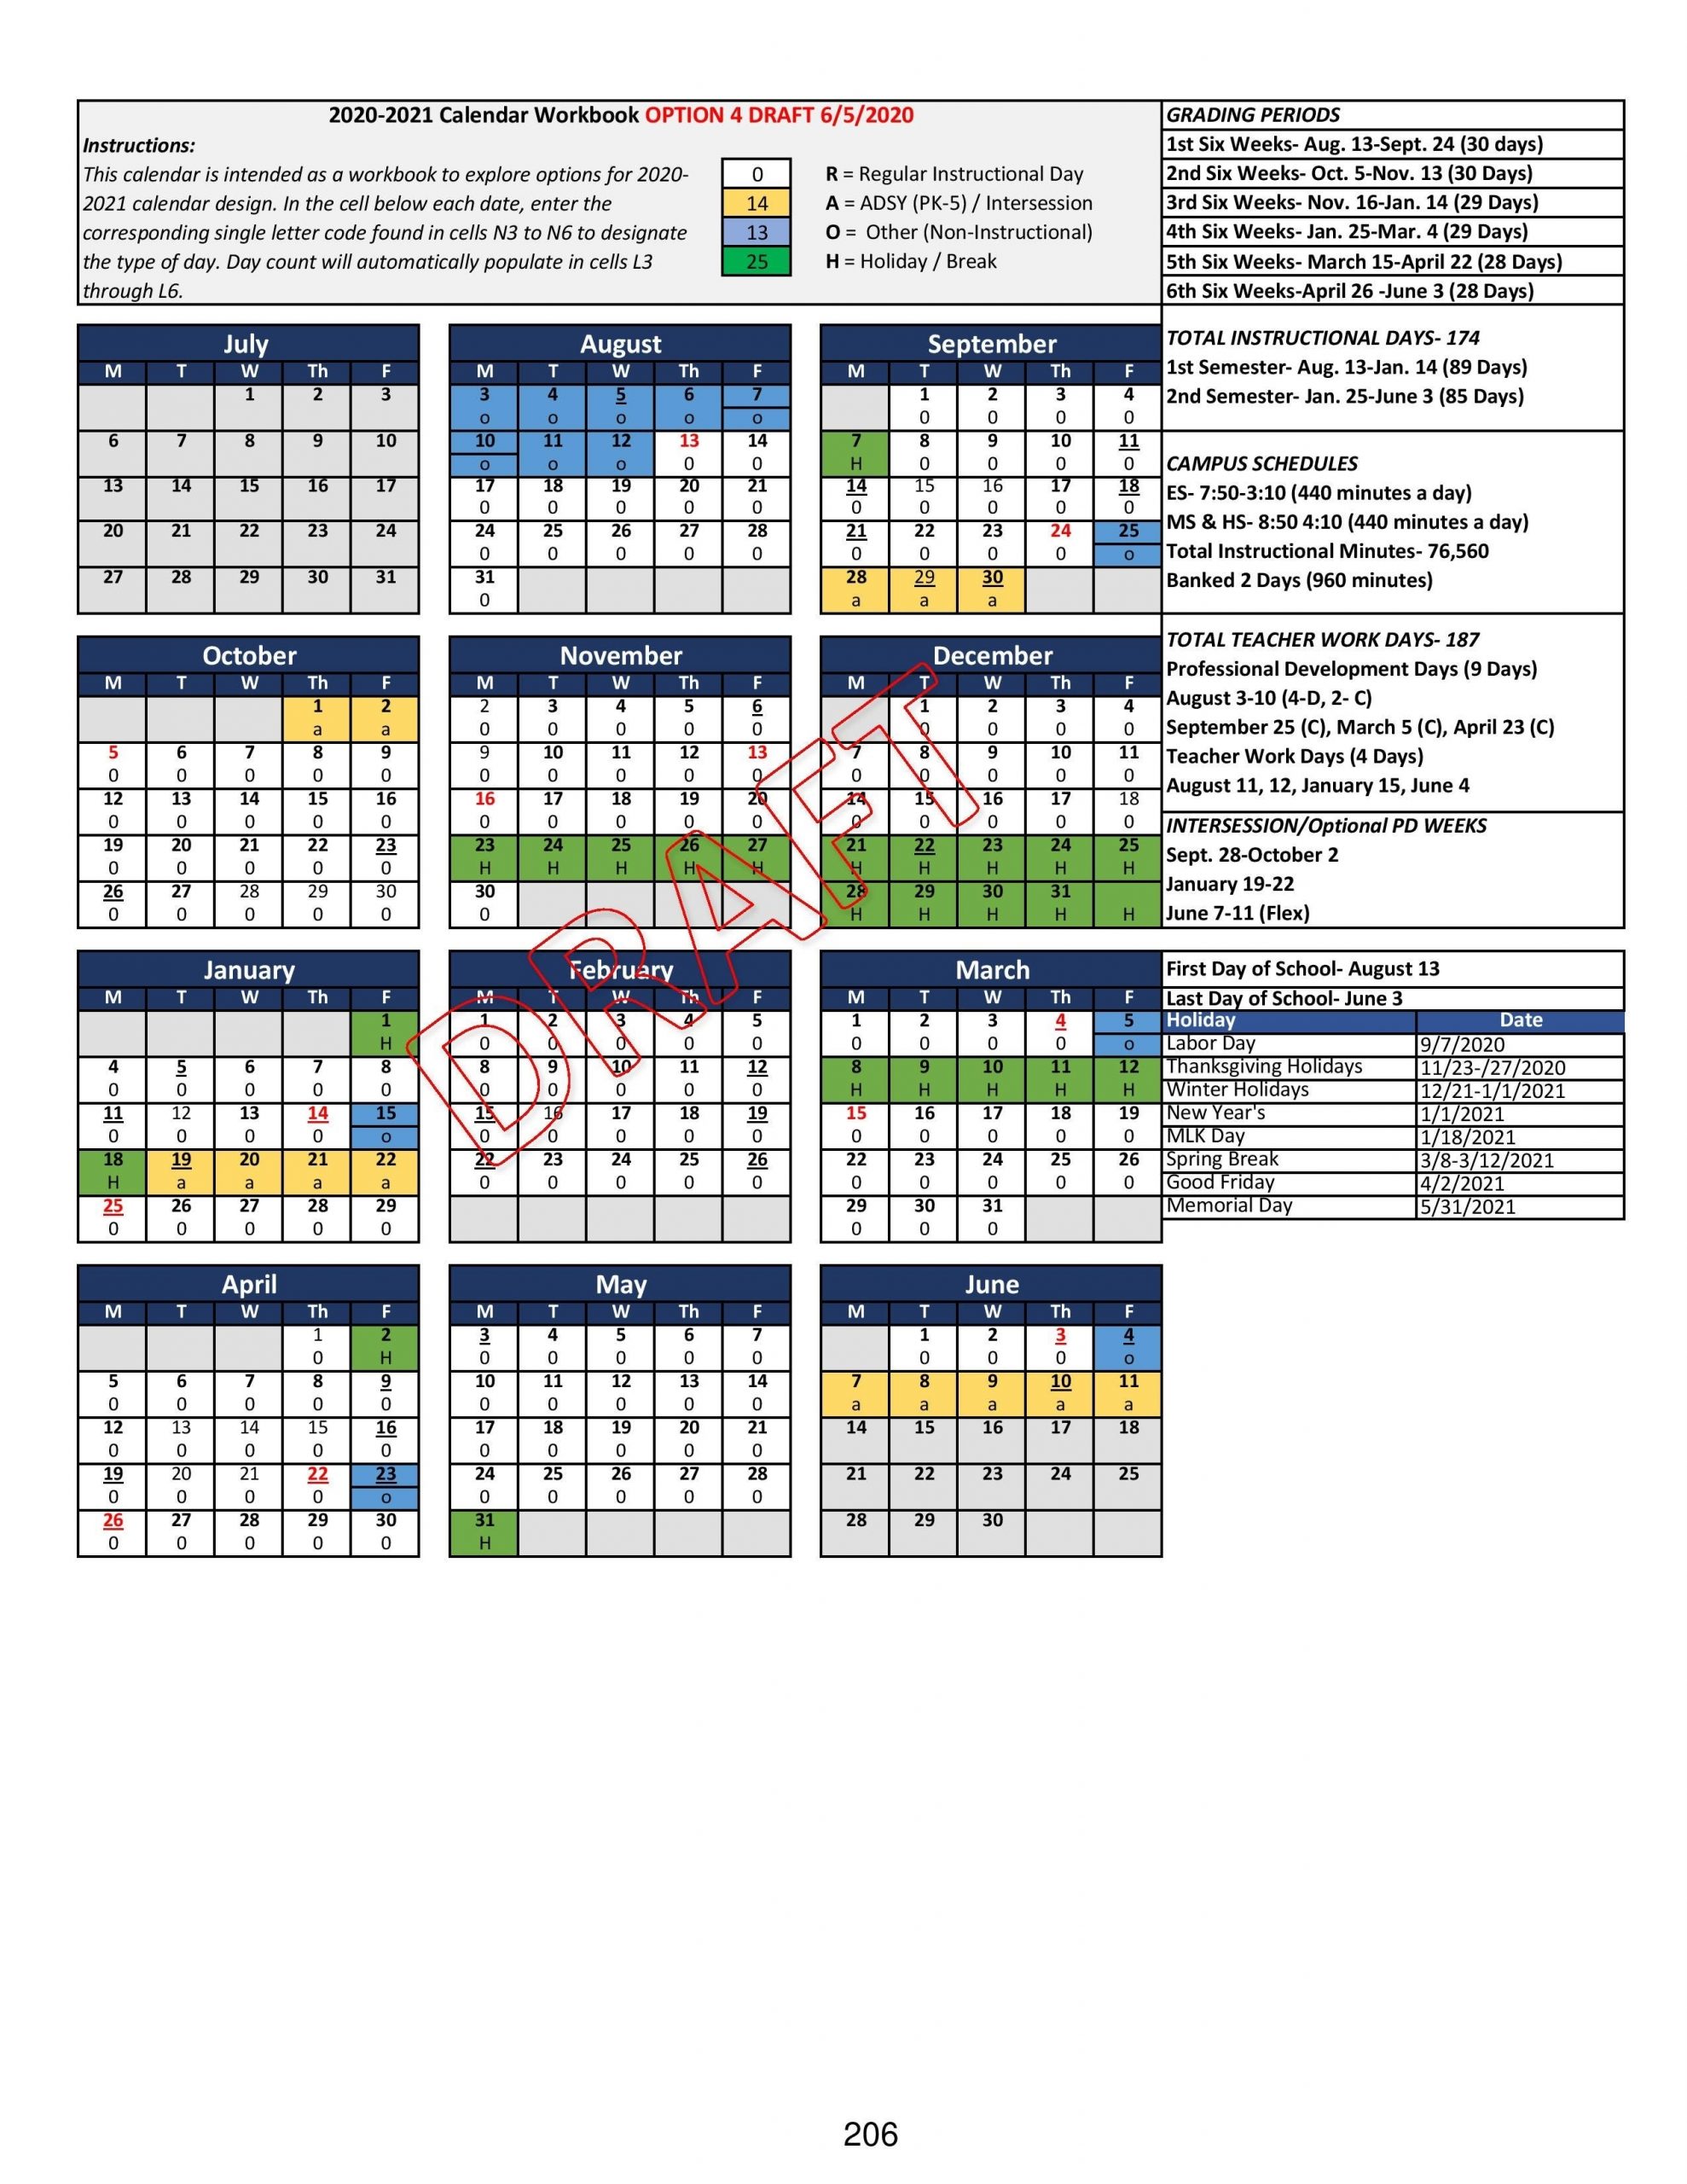 butler university fall 2021 calendar